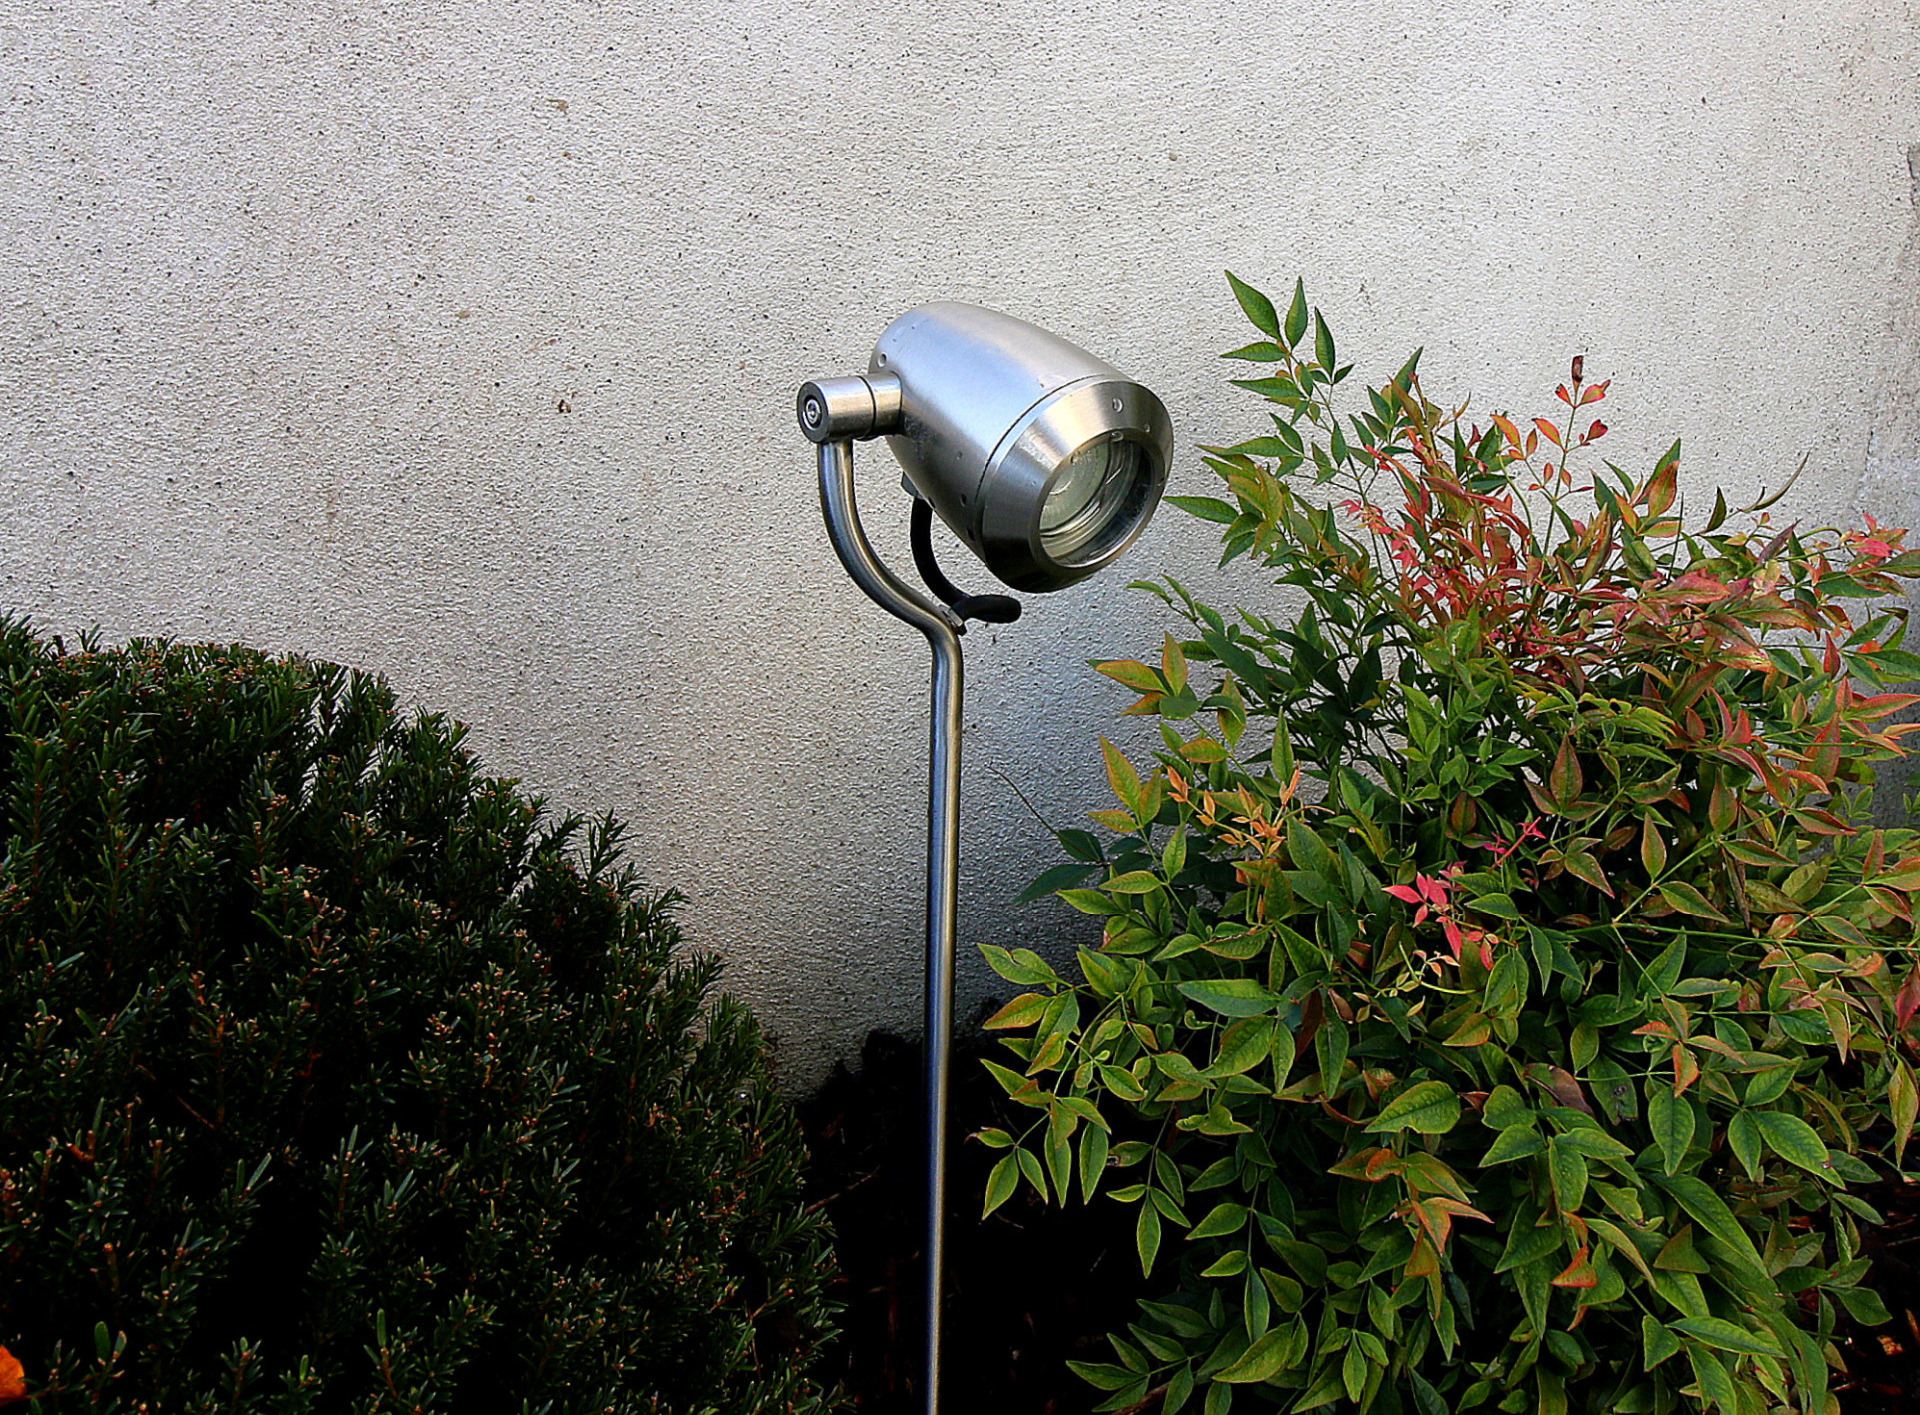 Stainless Steel LED Outdoor Garden Lighting | in stock at GardenStudio, Tel 087-2306 128